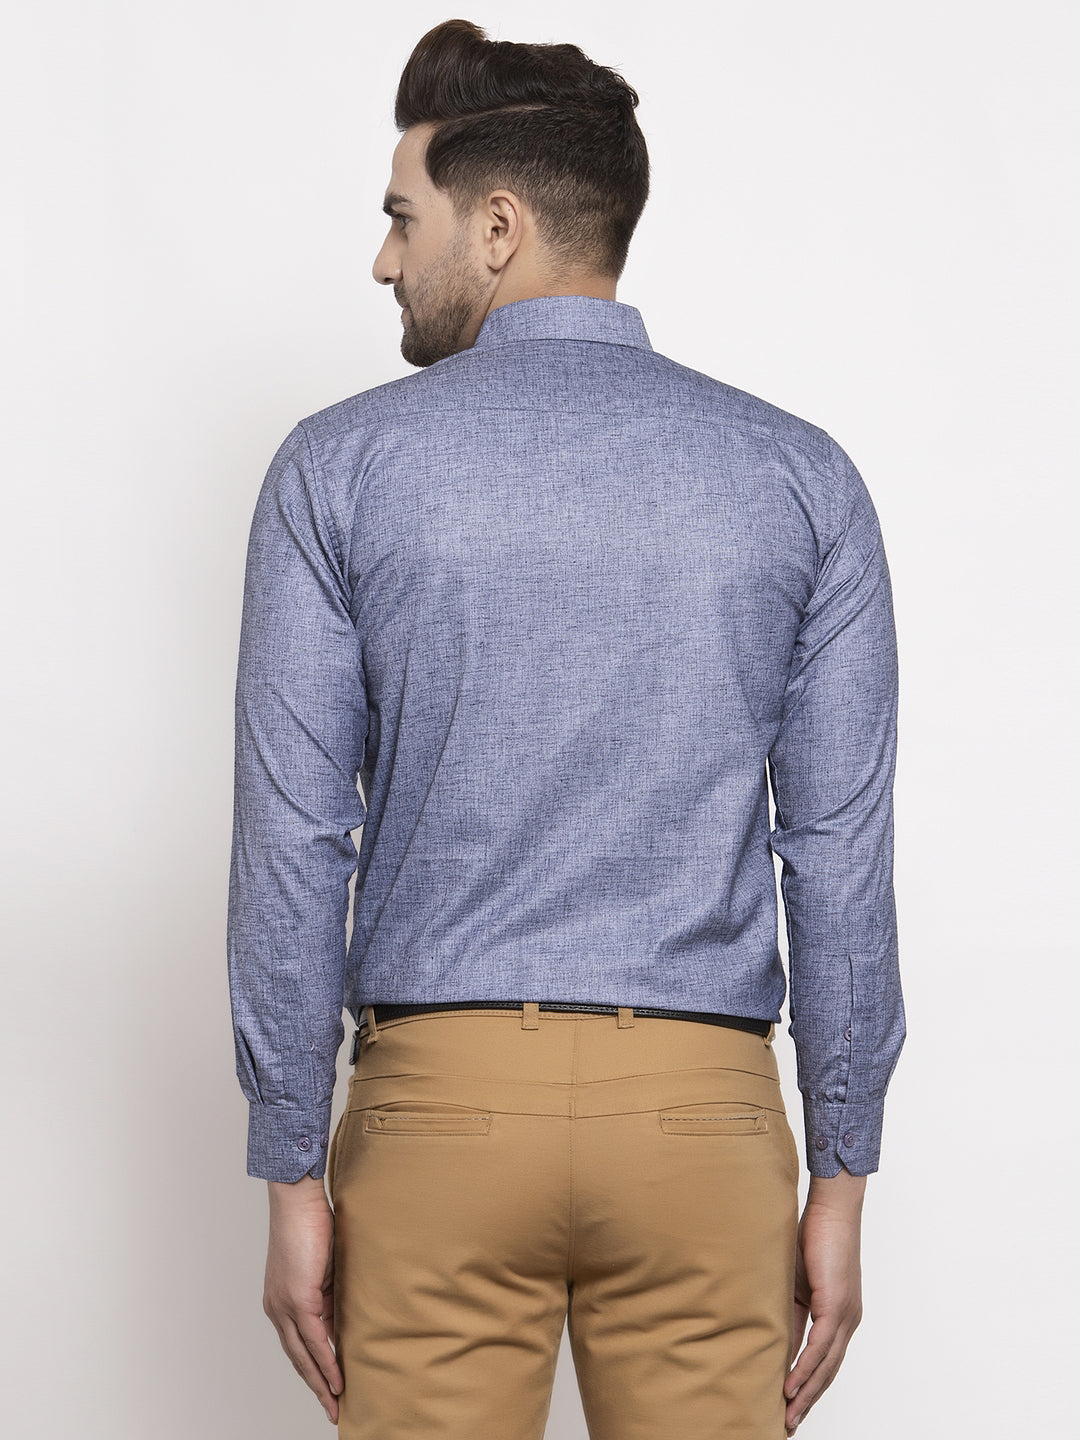 Men's Grey Cotton Solid Button Down Formal Shirts ( SF 753Grey ) - Jainish